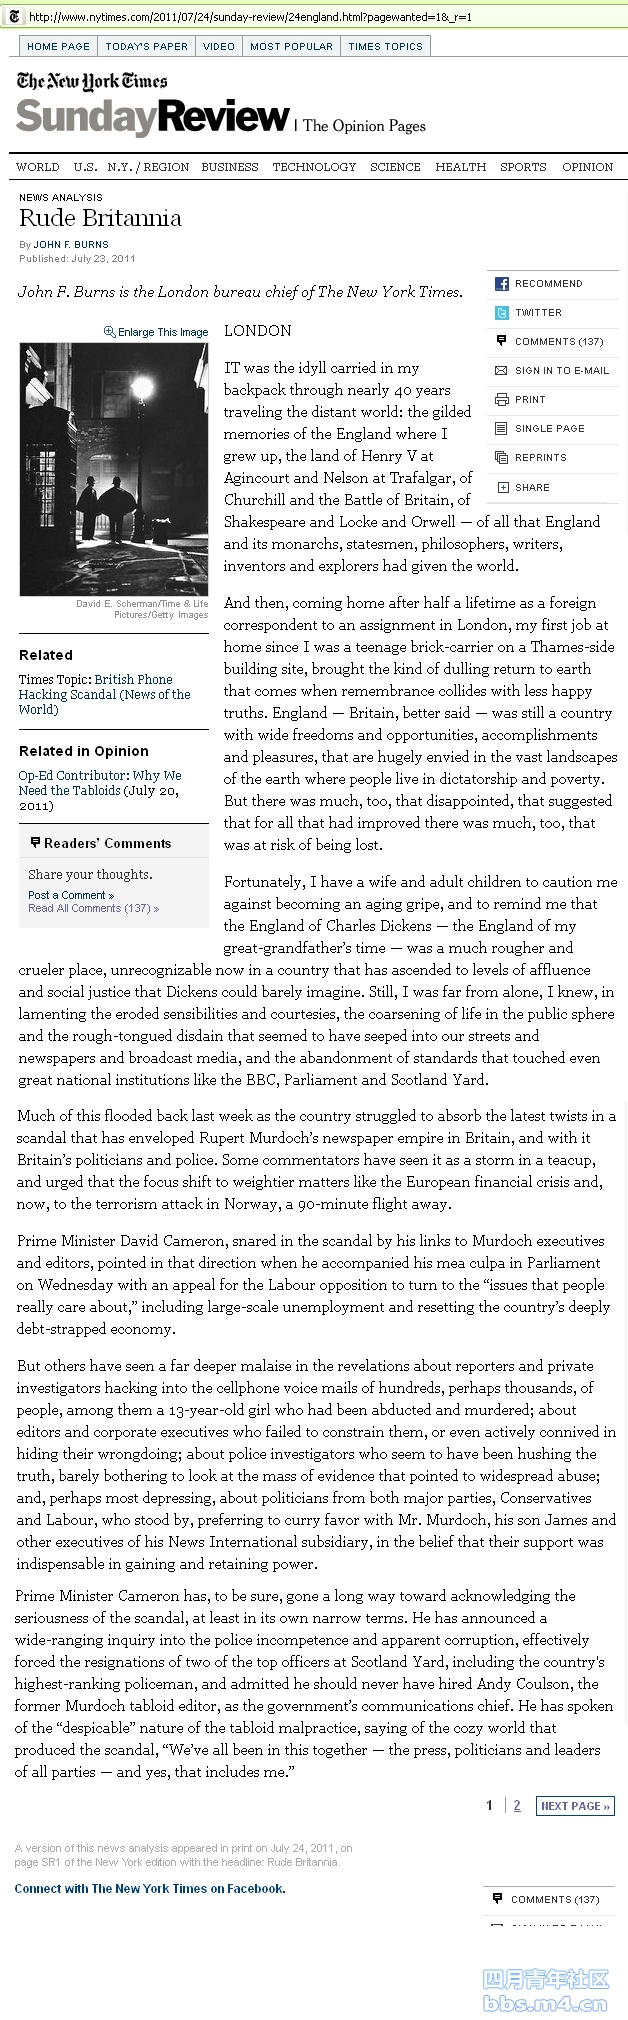 Rude Britannia_New_York_Times_ 2011_july_23_01.jpg